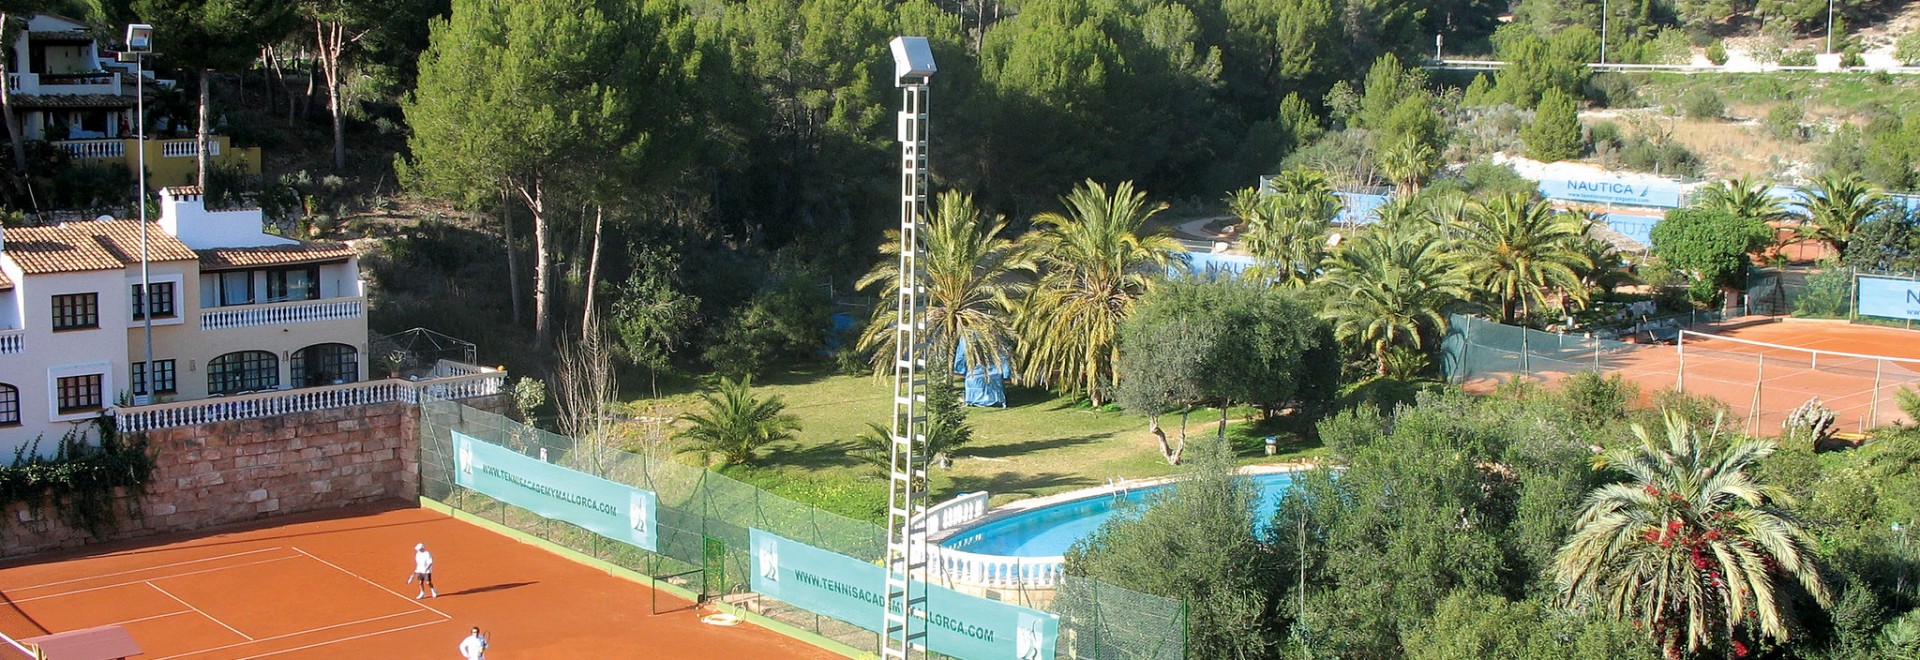 Adult Tennis Camp - Tennis Academy Mallorca, Paguera